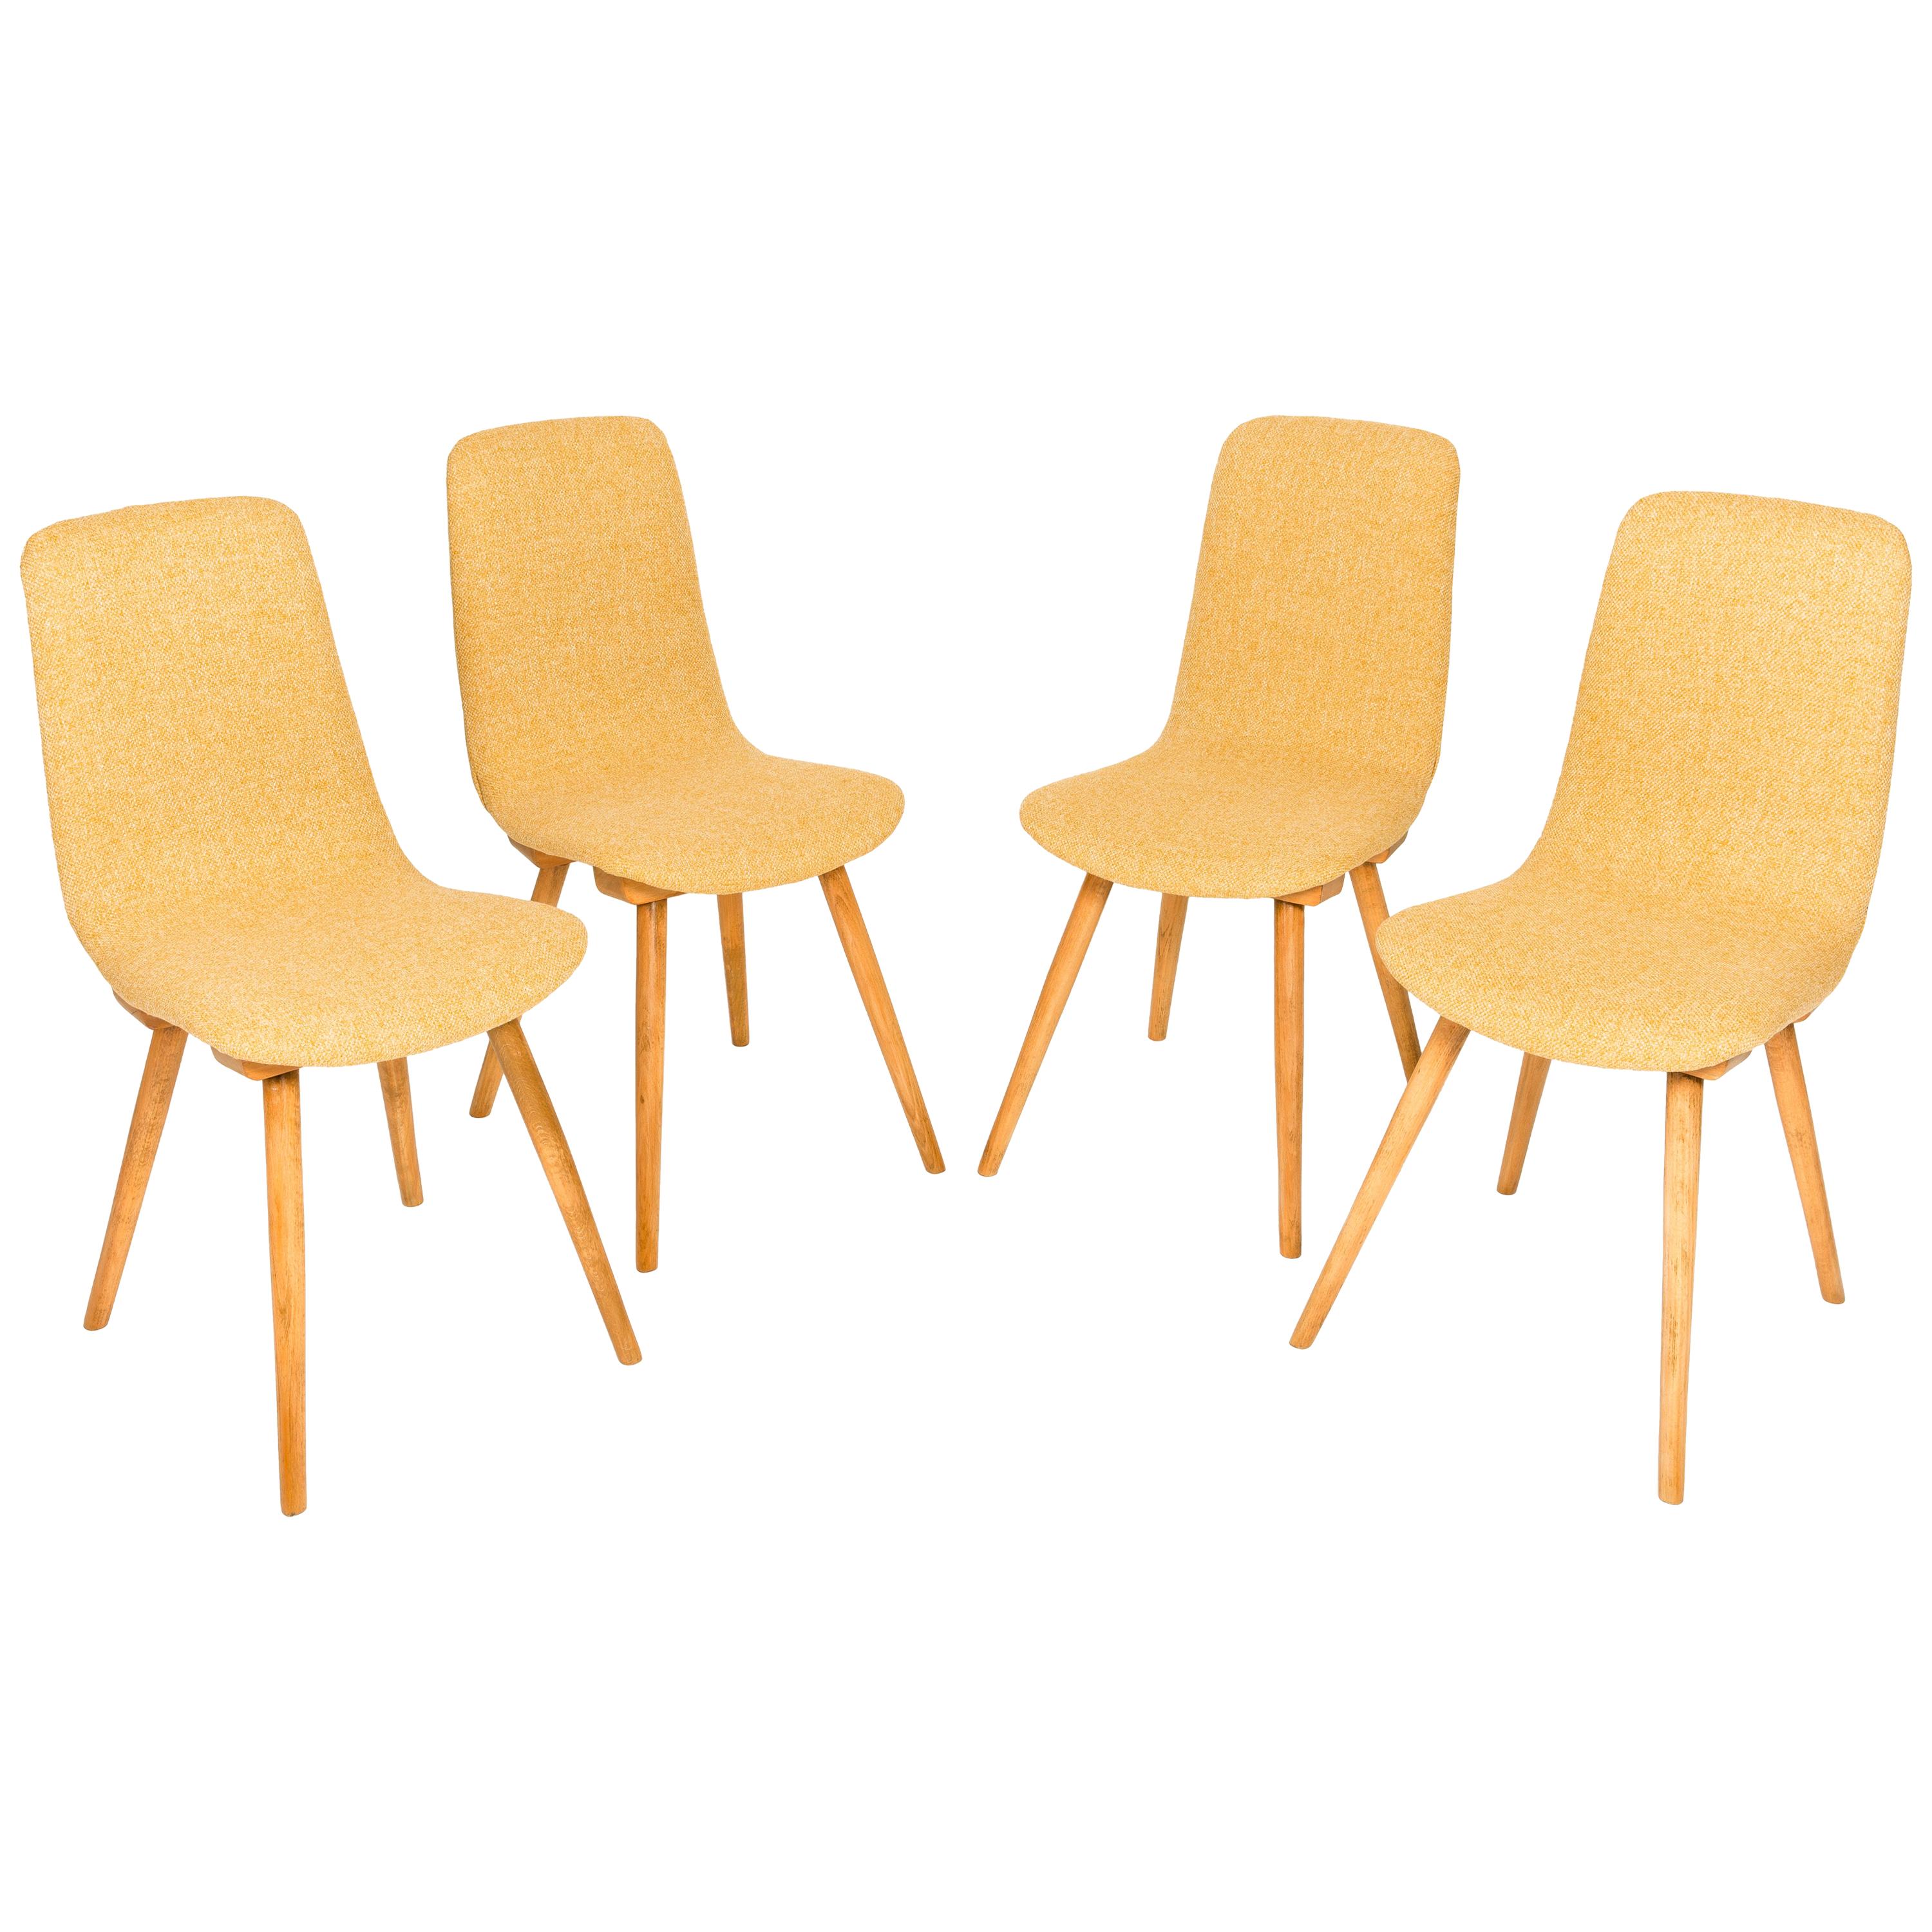 Set of Four 20th Century Fameg Yellow Vintage Chairs, 1960s, Poland